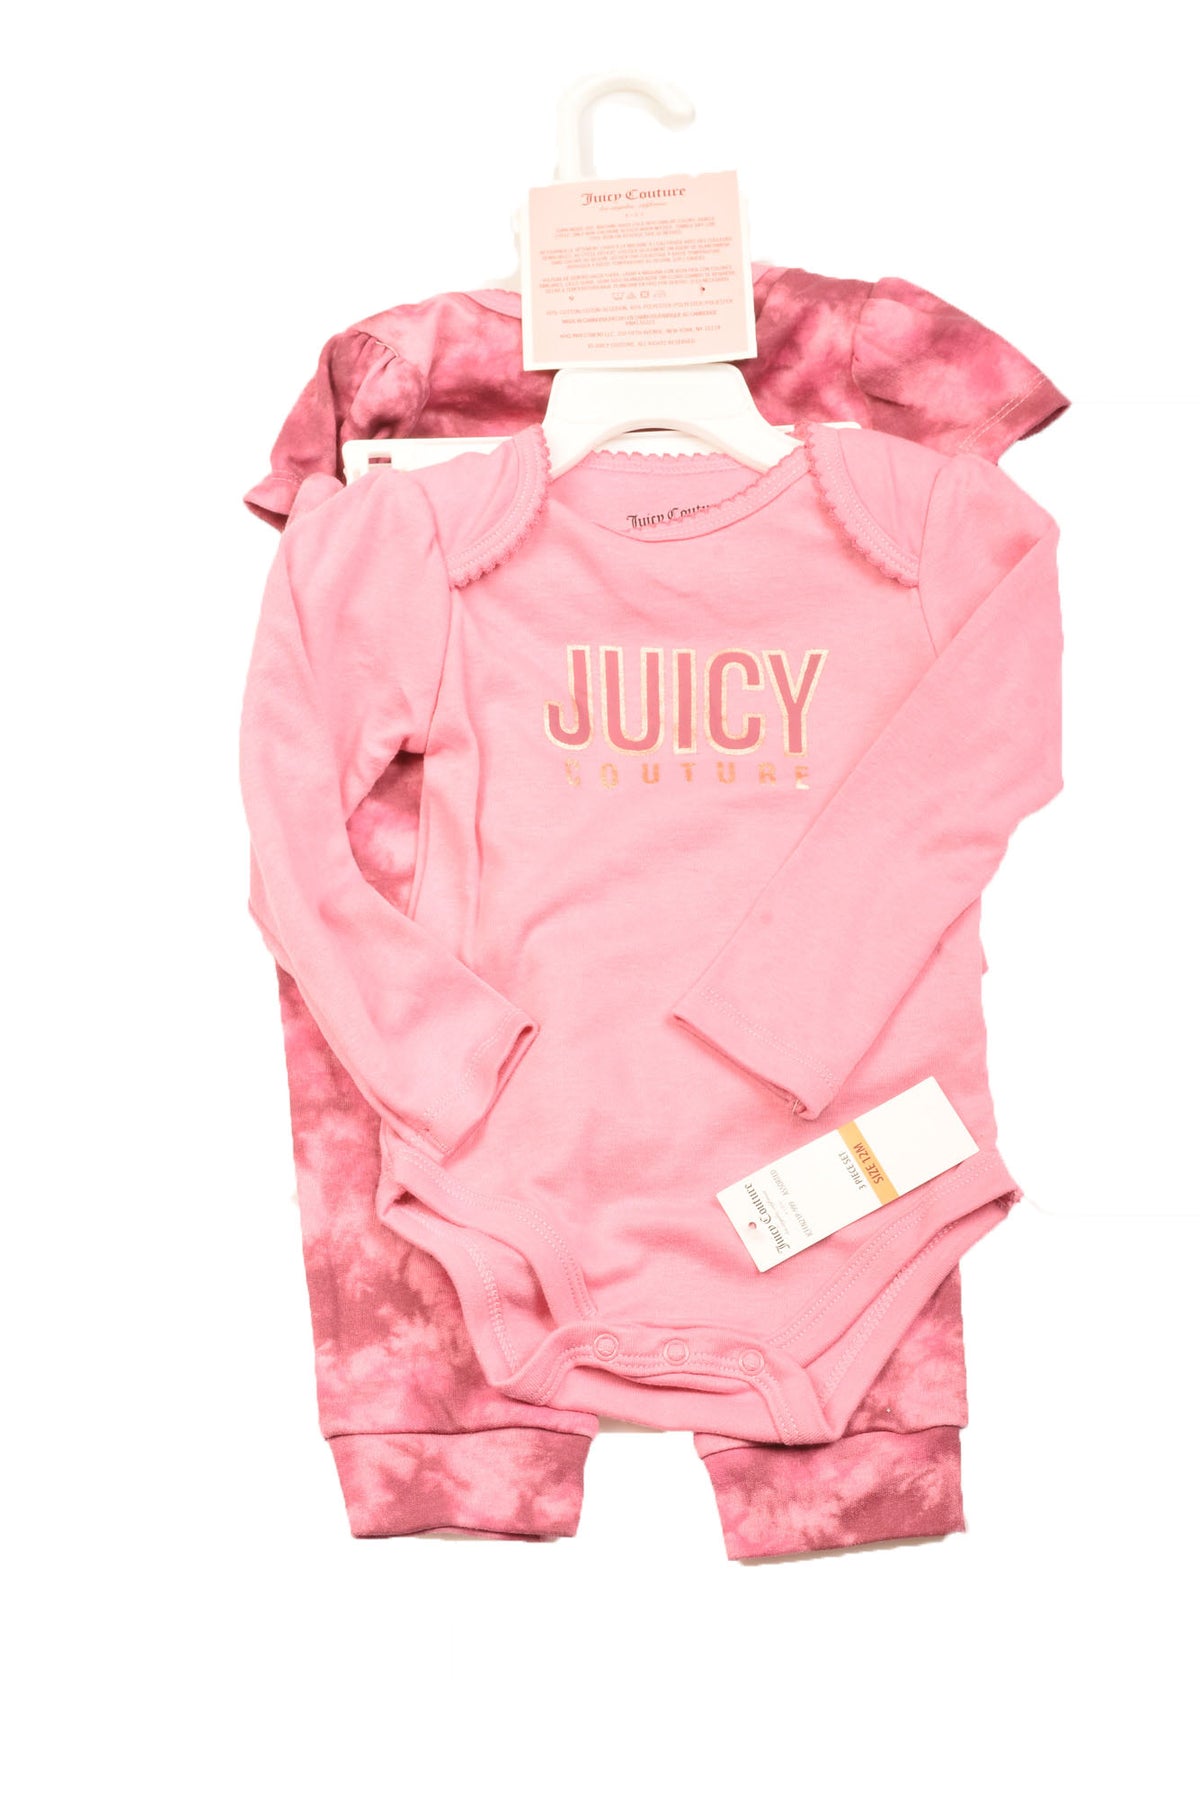 Juicy Couture 12 Months  3pc. Set